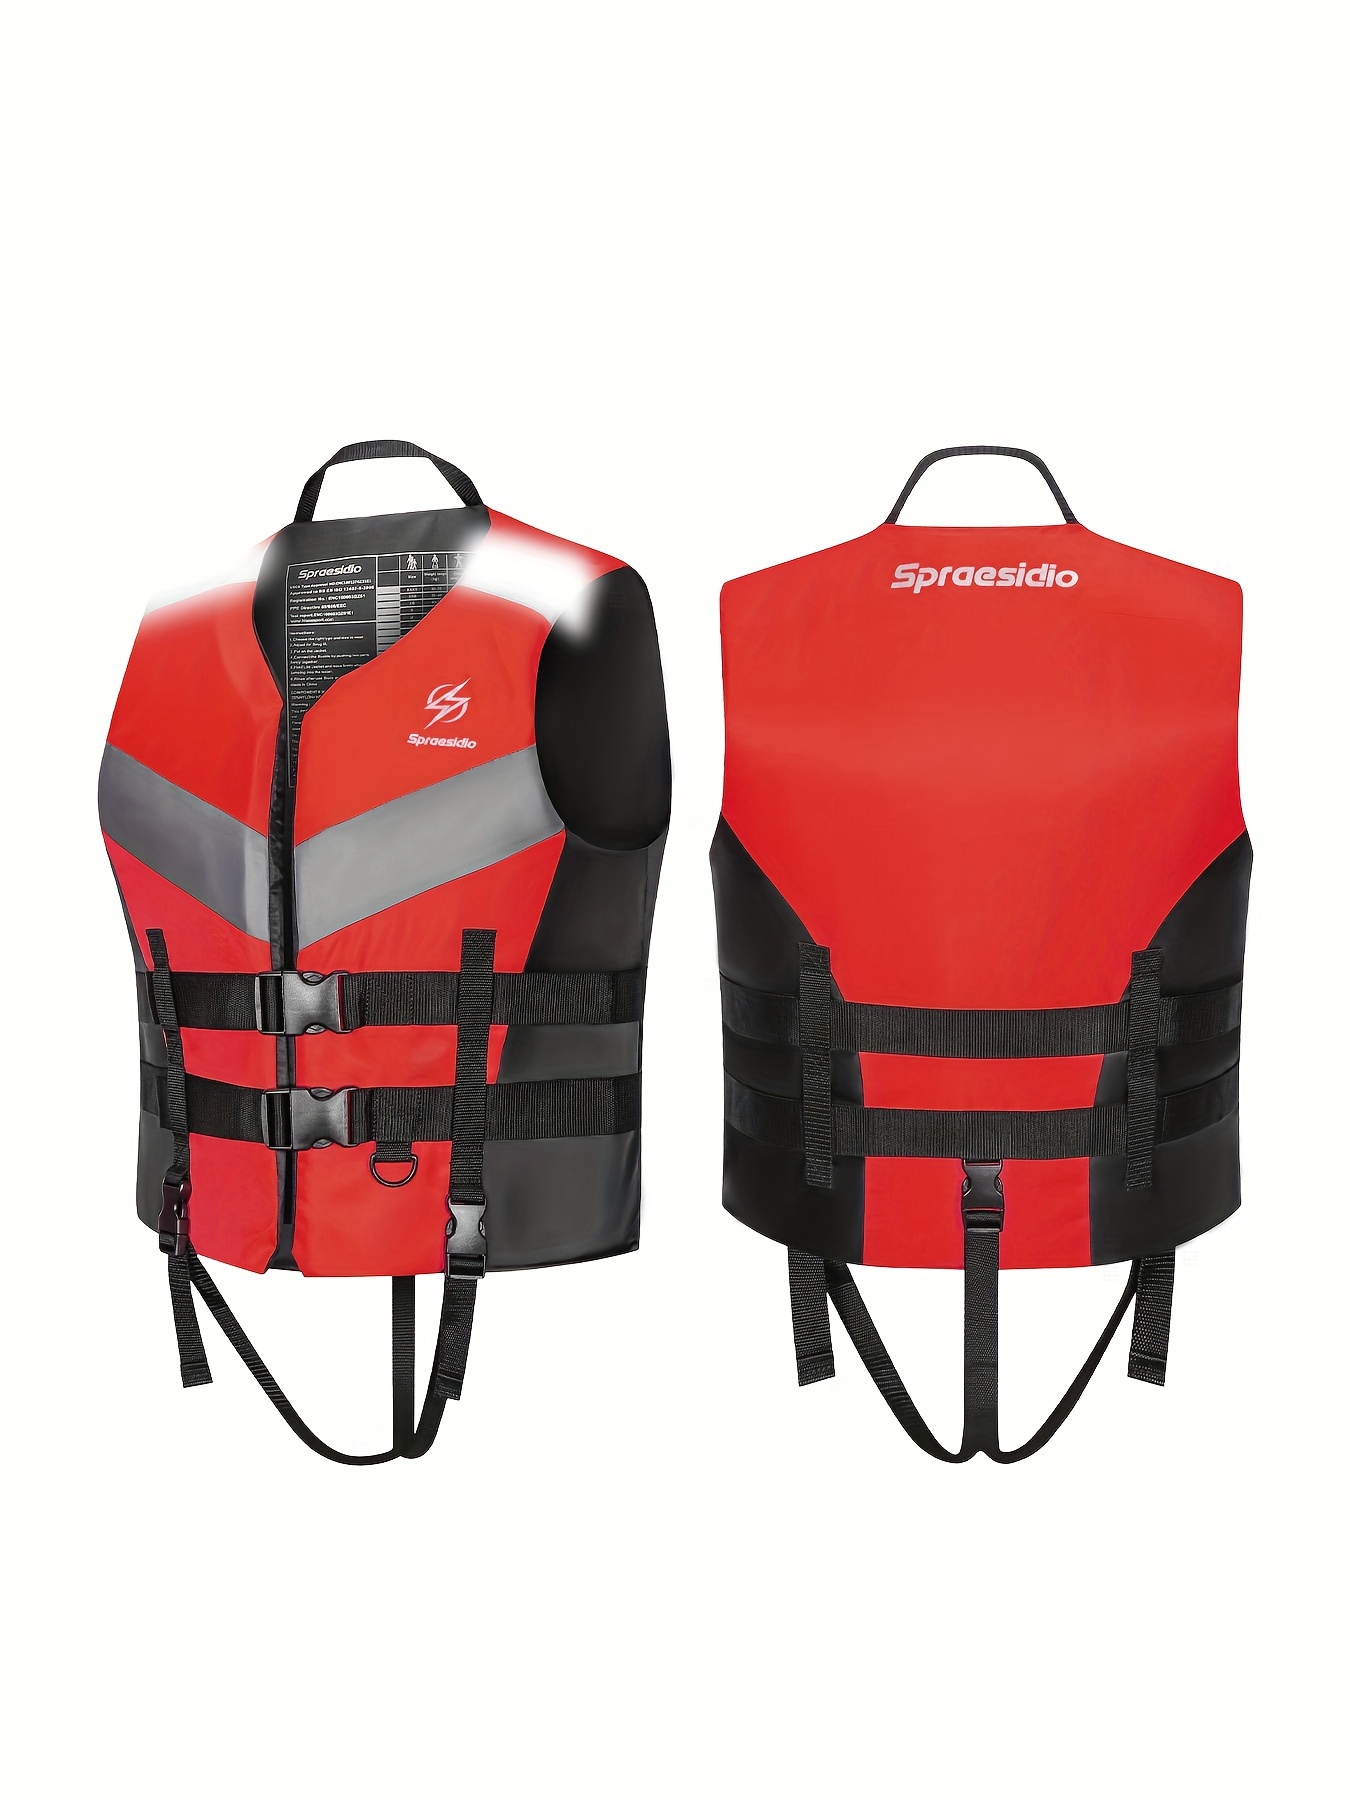 Camouflage Green Fishing Vest Adult Lifesaving Life Jacket Clothing Safety  Survival Suit Swimming Drifting Fishing